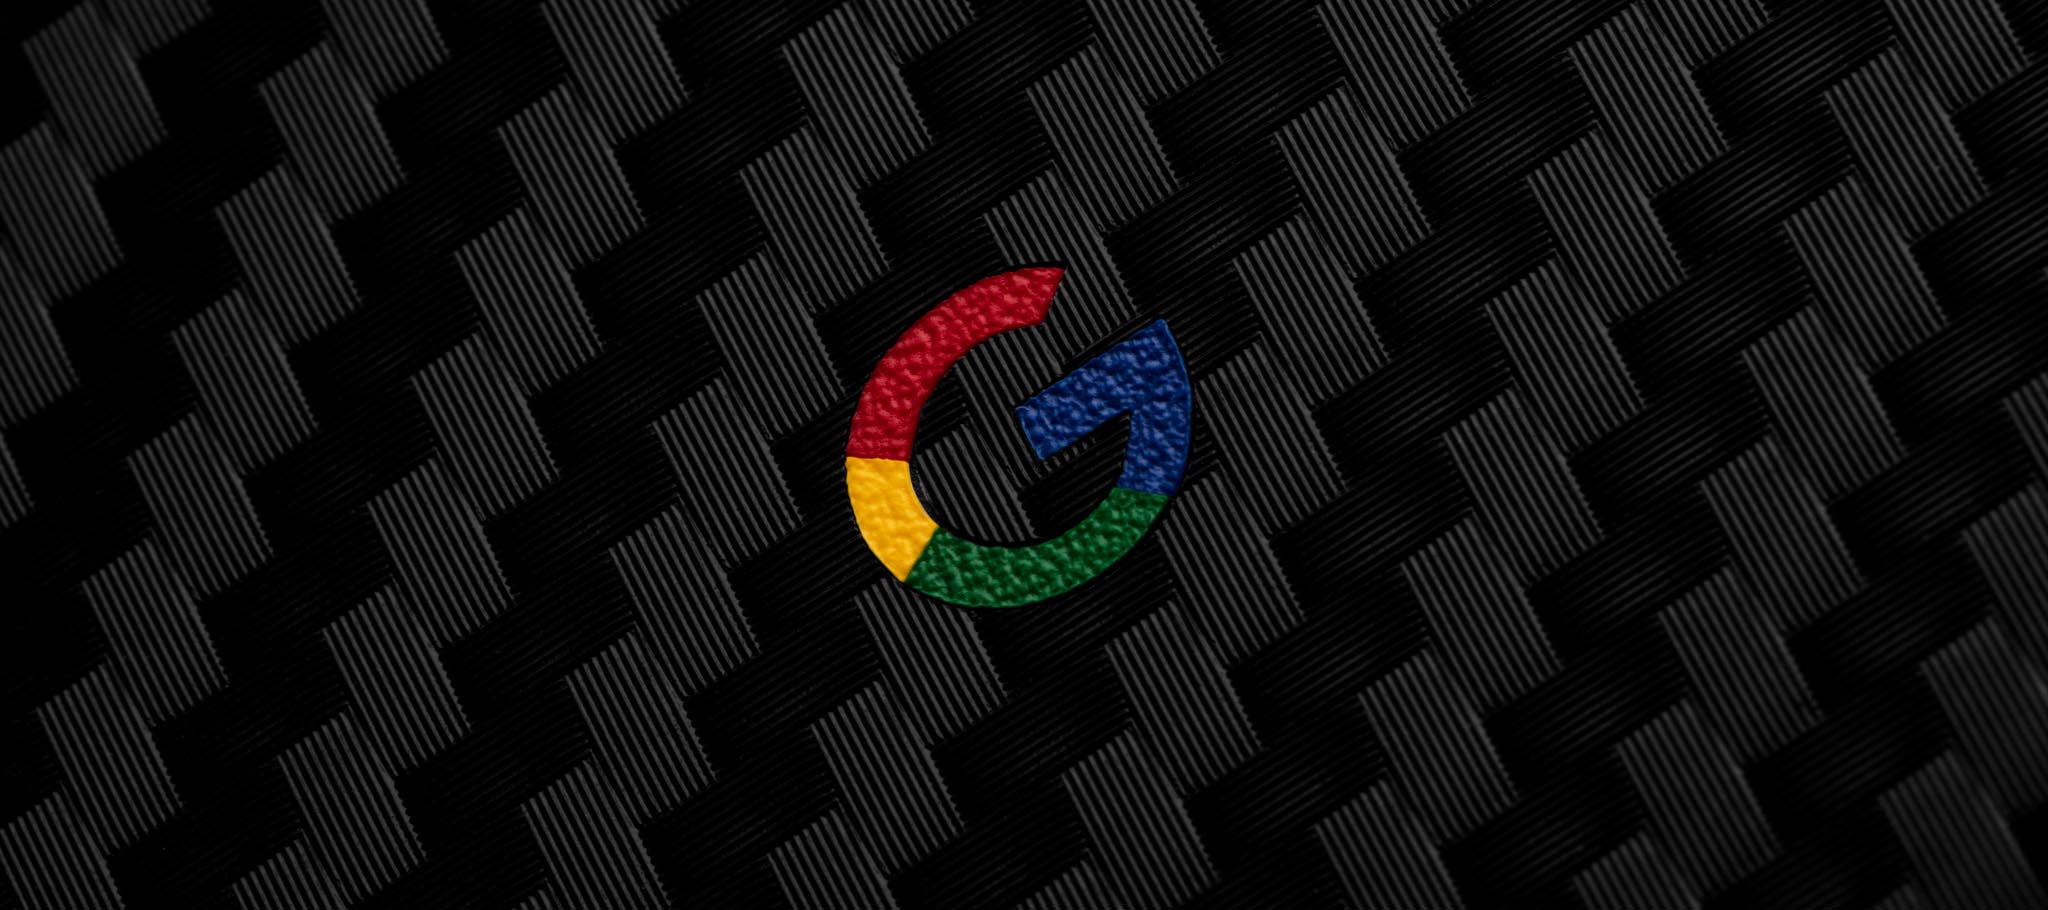 D Brand Logo - Google Pixel 2 XL Skins, Wraps & Covers » dbrand » dbrand